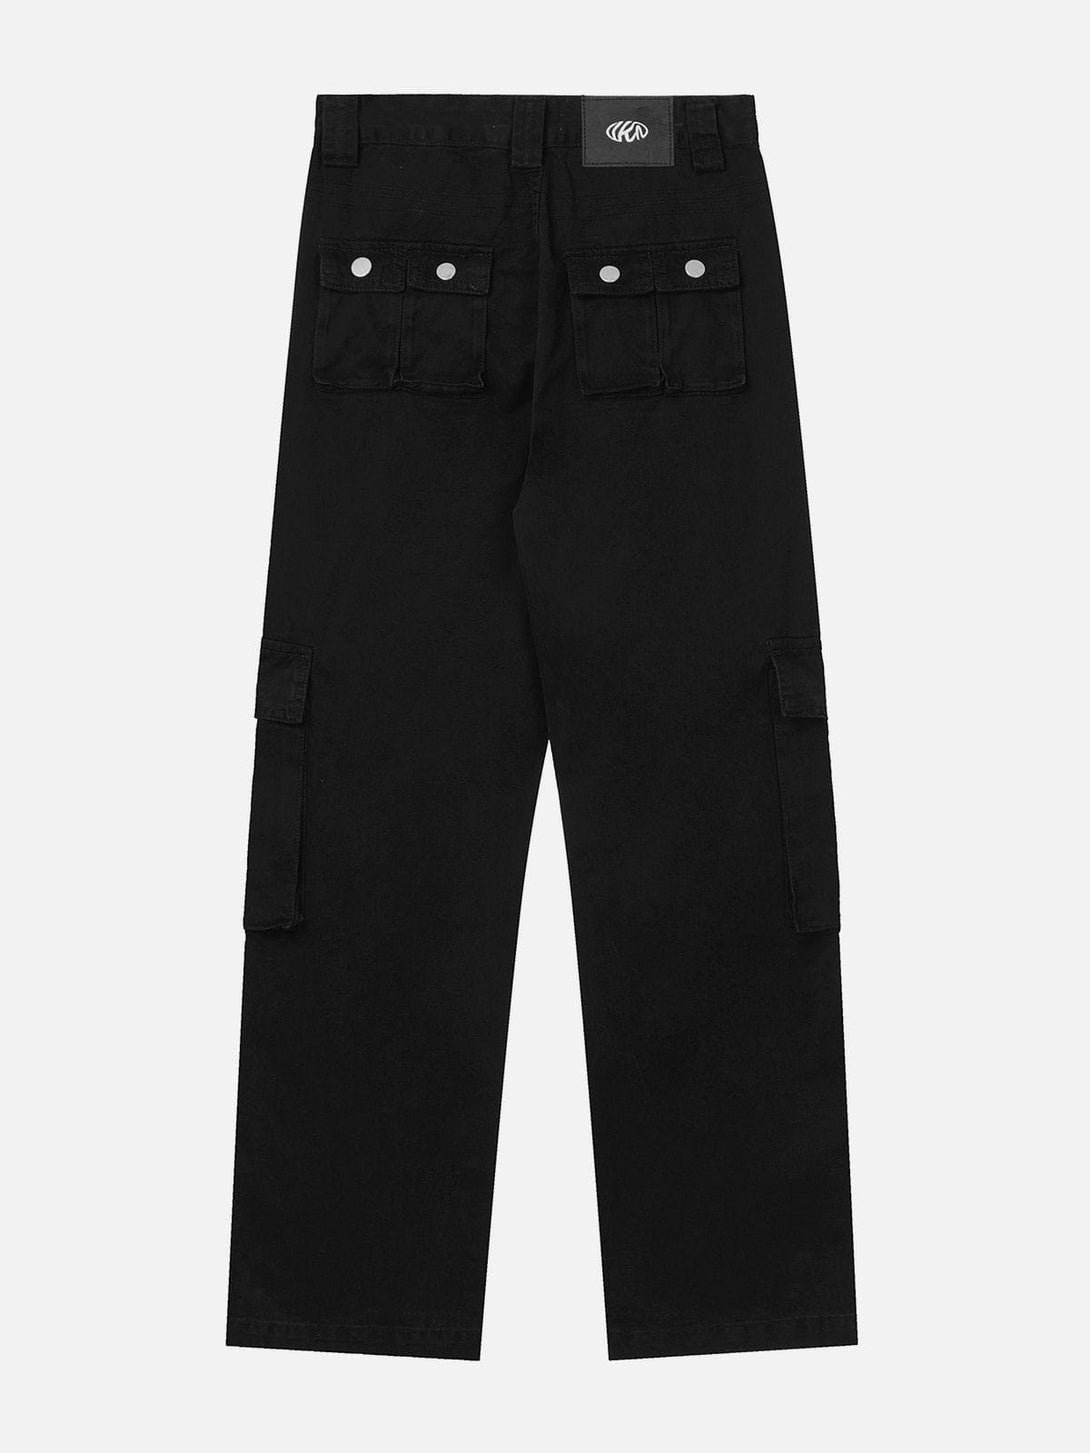 Majesda® - Multi Pocket Denim Cargo Pants outfit ideas streetwear fashion